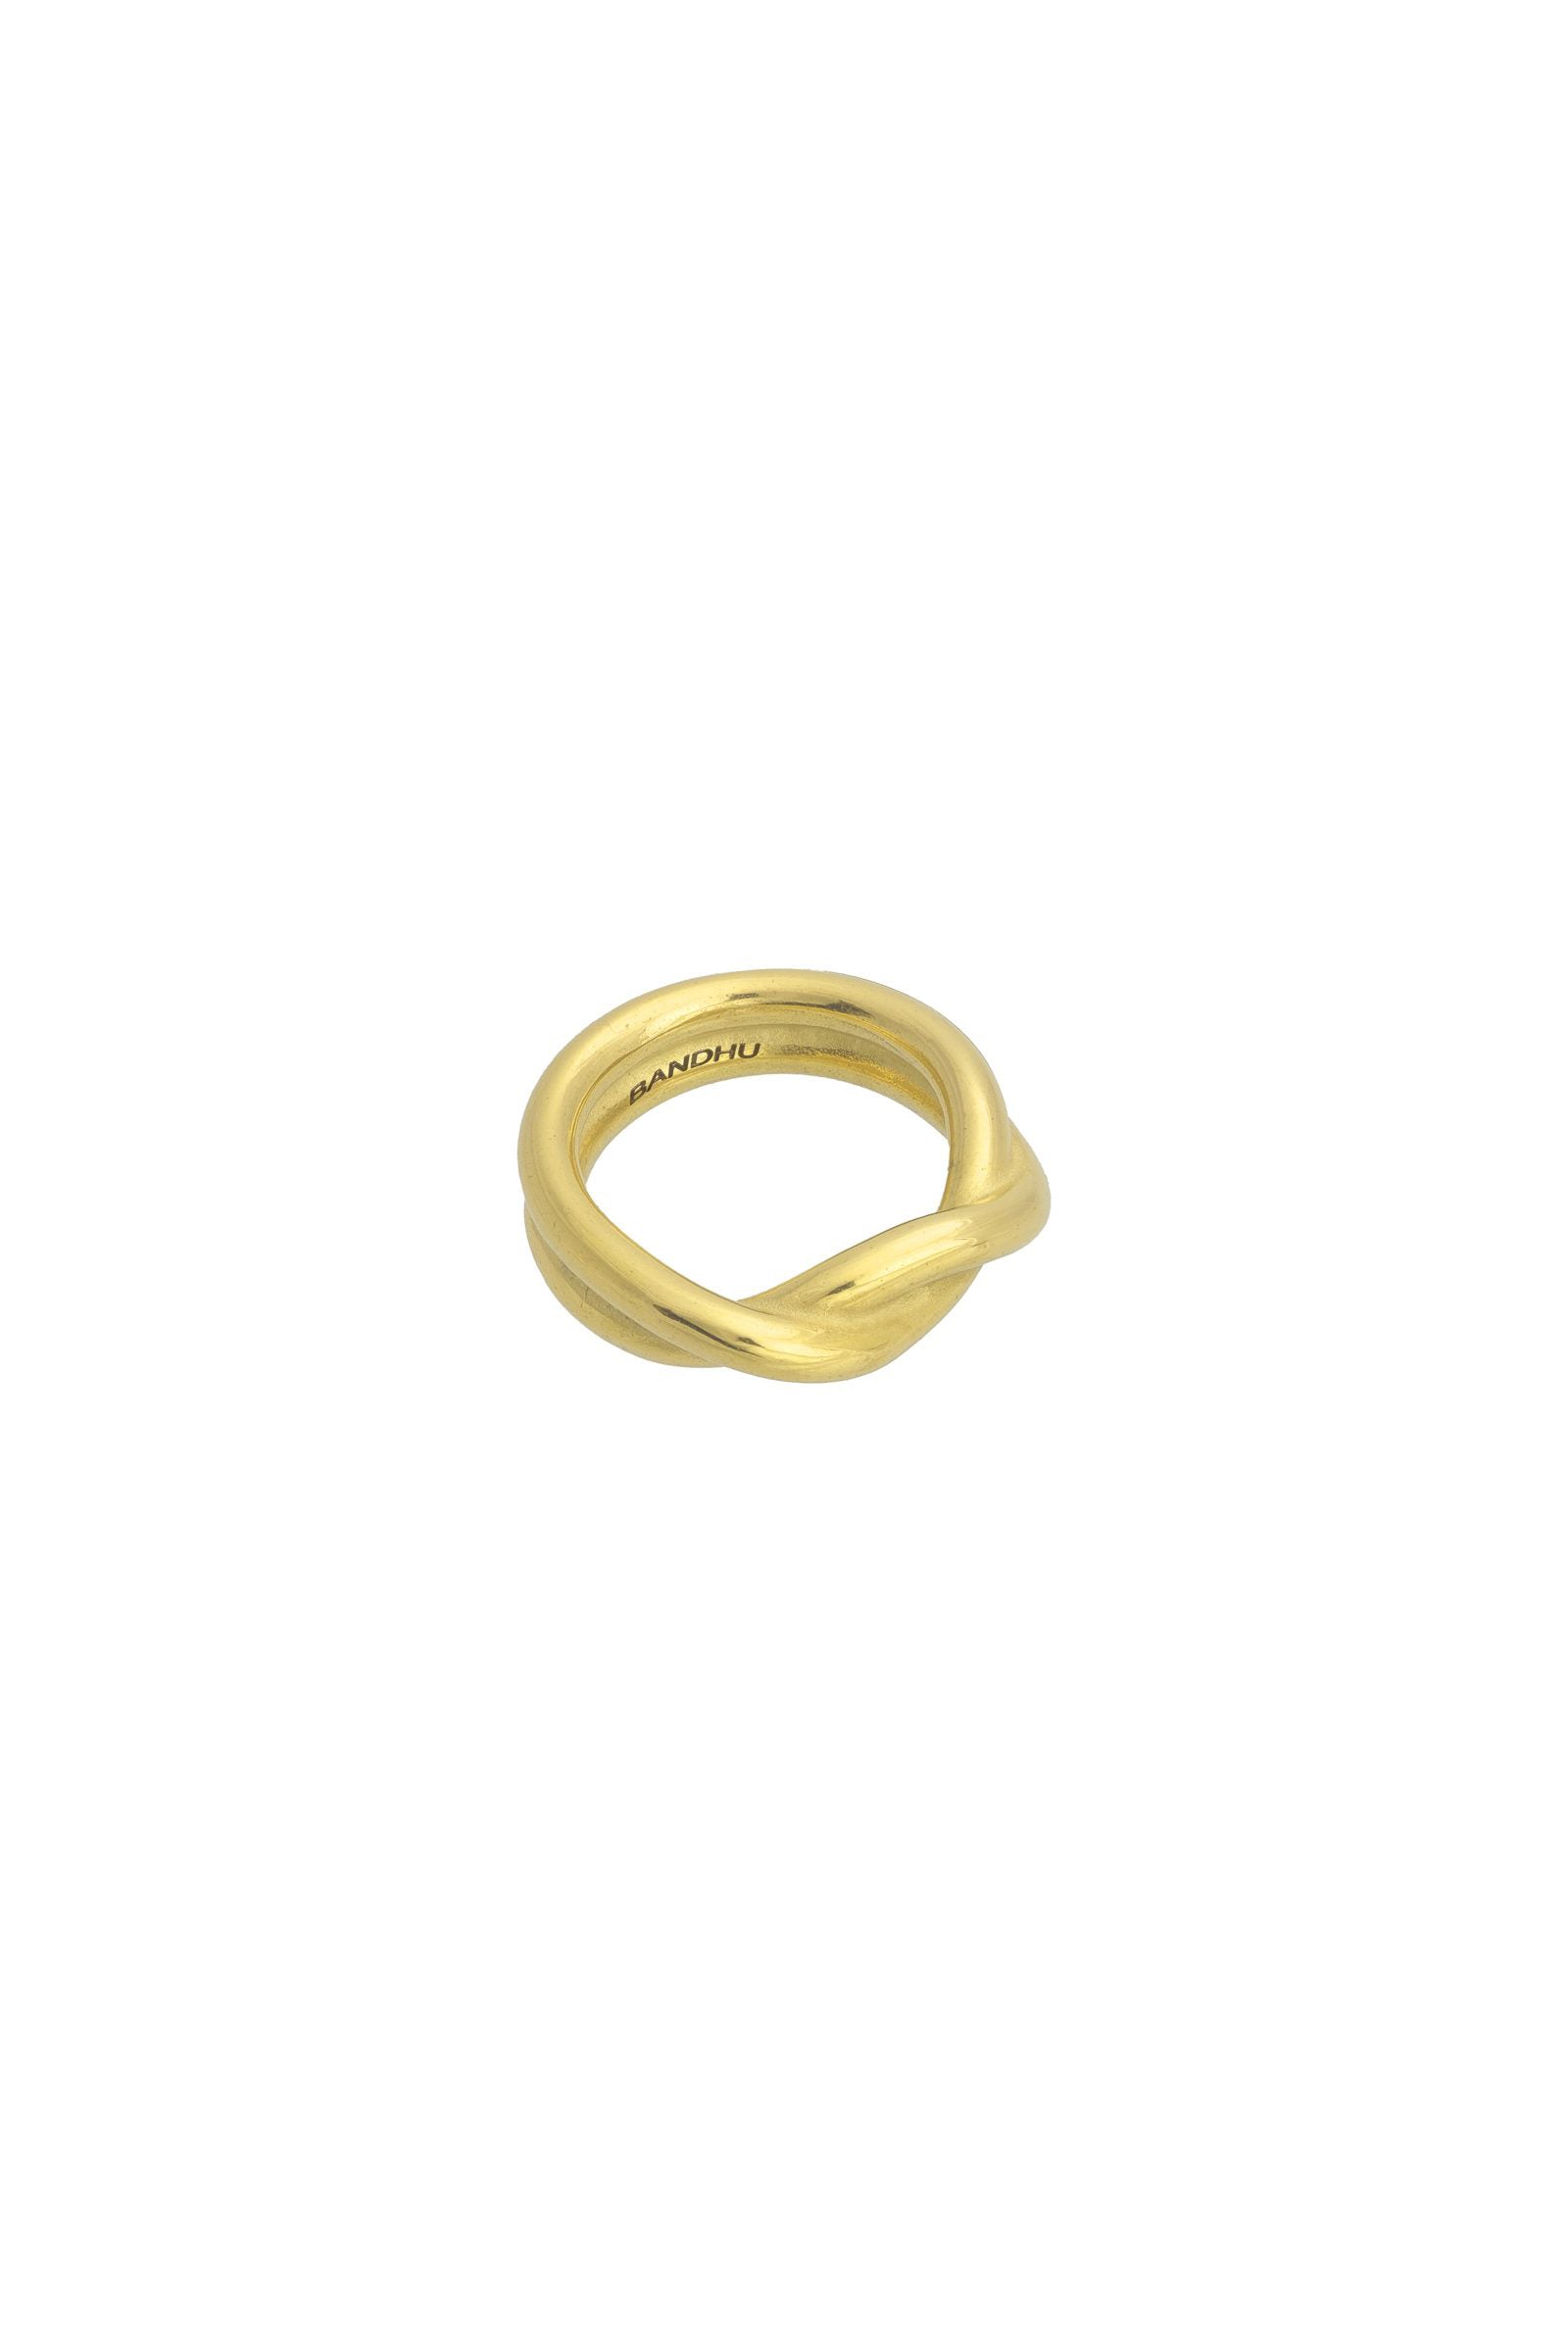 Bandhu Twine Ring - Gold - RUM Amsterdam